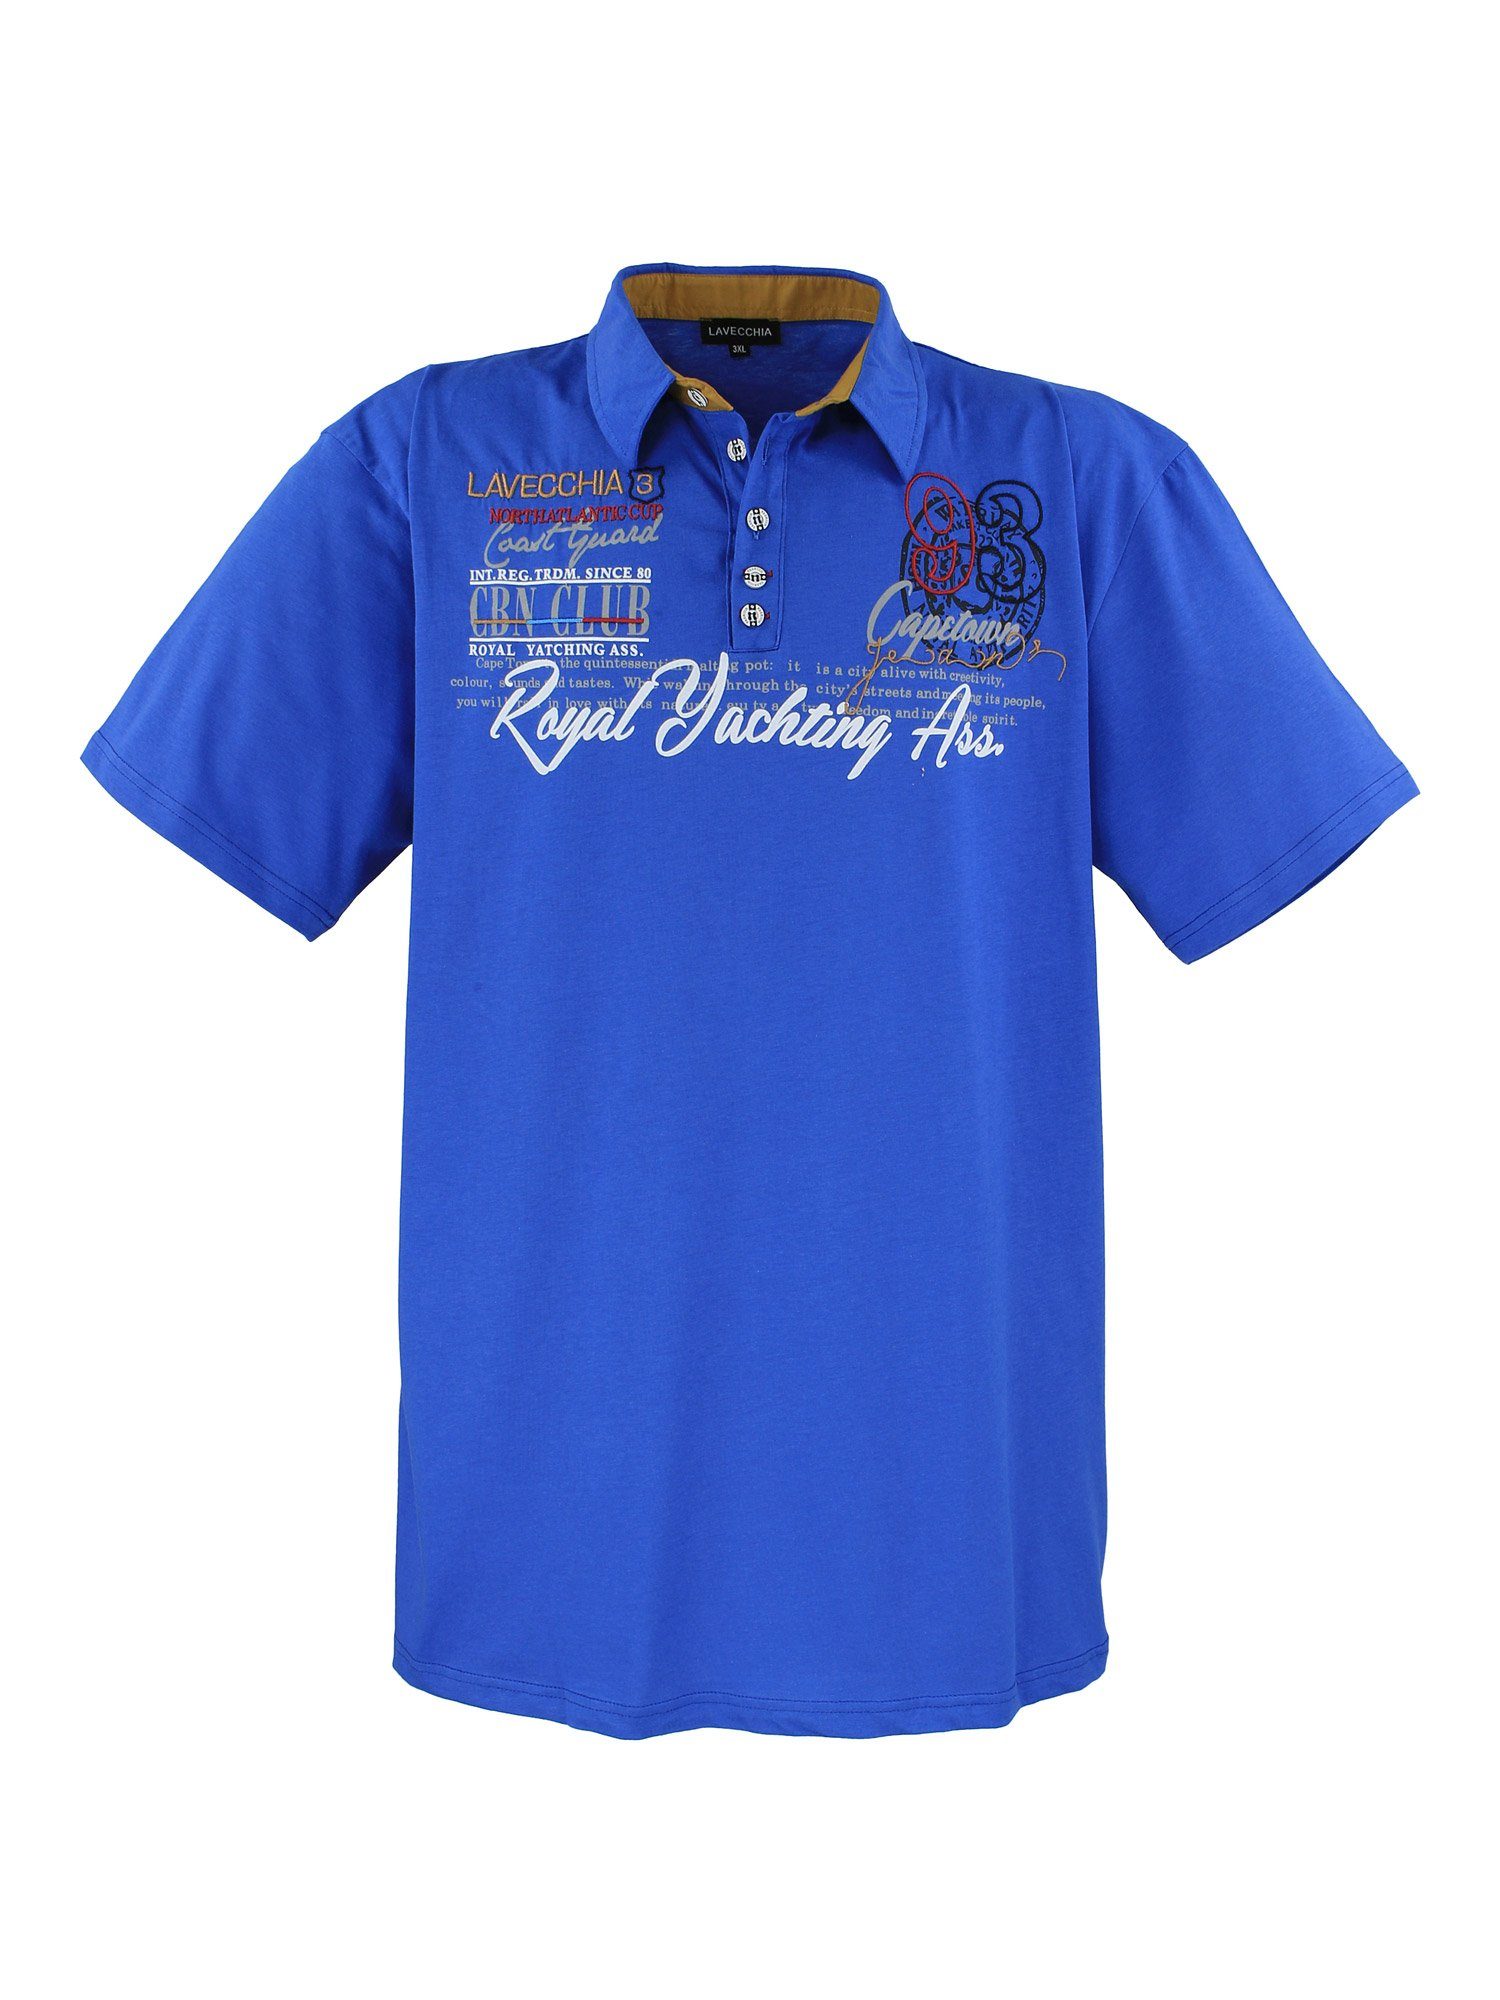 Lavecchia Poloshirt Übergrößen Herren LV-4688 Polo Polo royalblau Shirt Herren Shirt